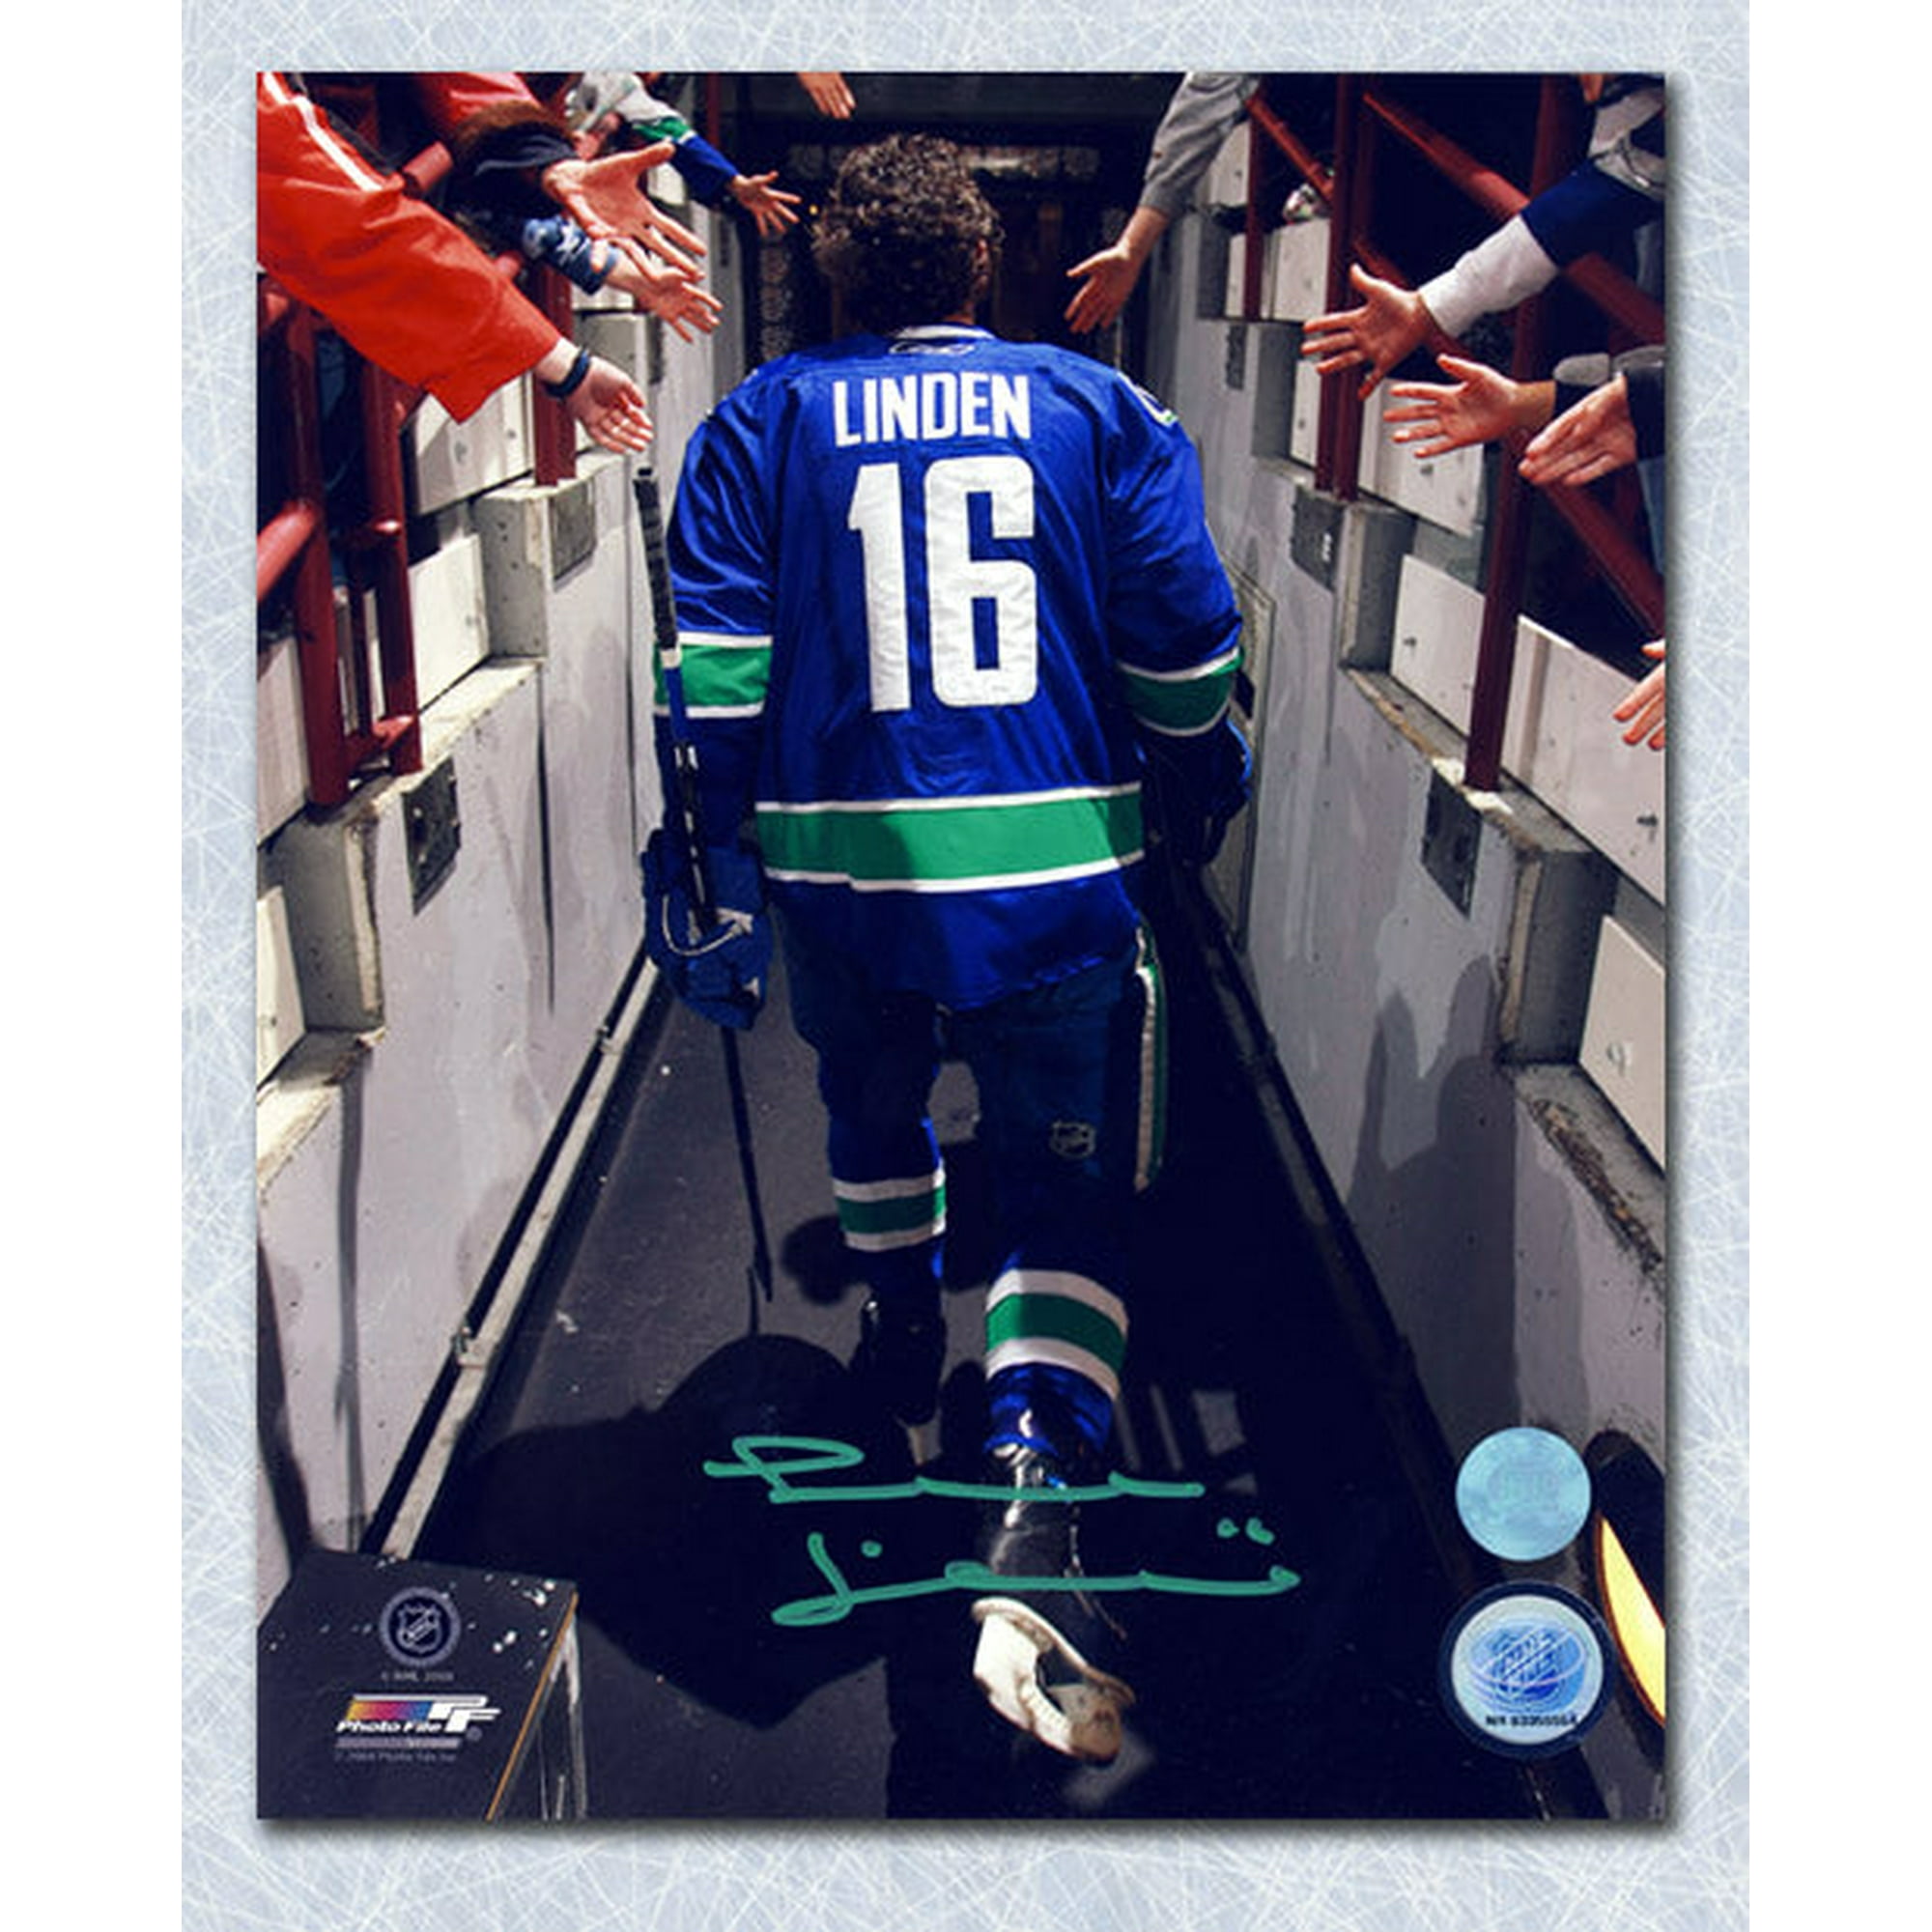 Trevor Linden Autographed Vancouver Canucks Puck